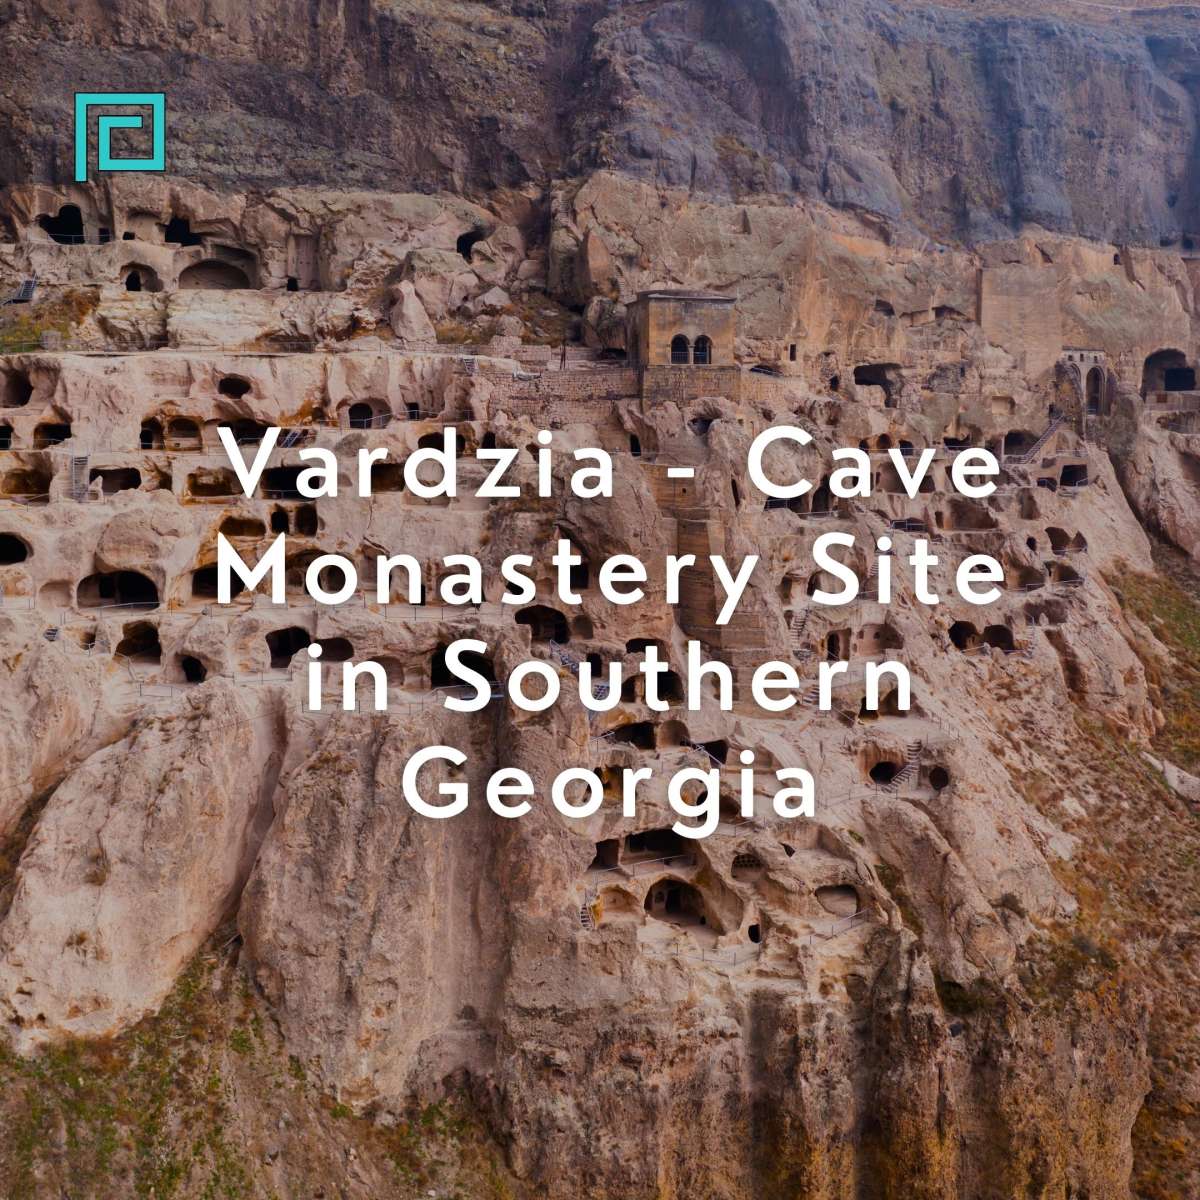 Vardzia - Cave Monastery Site in Southern Georgia